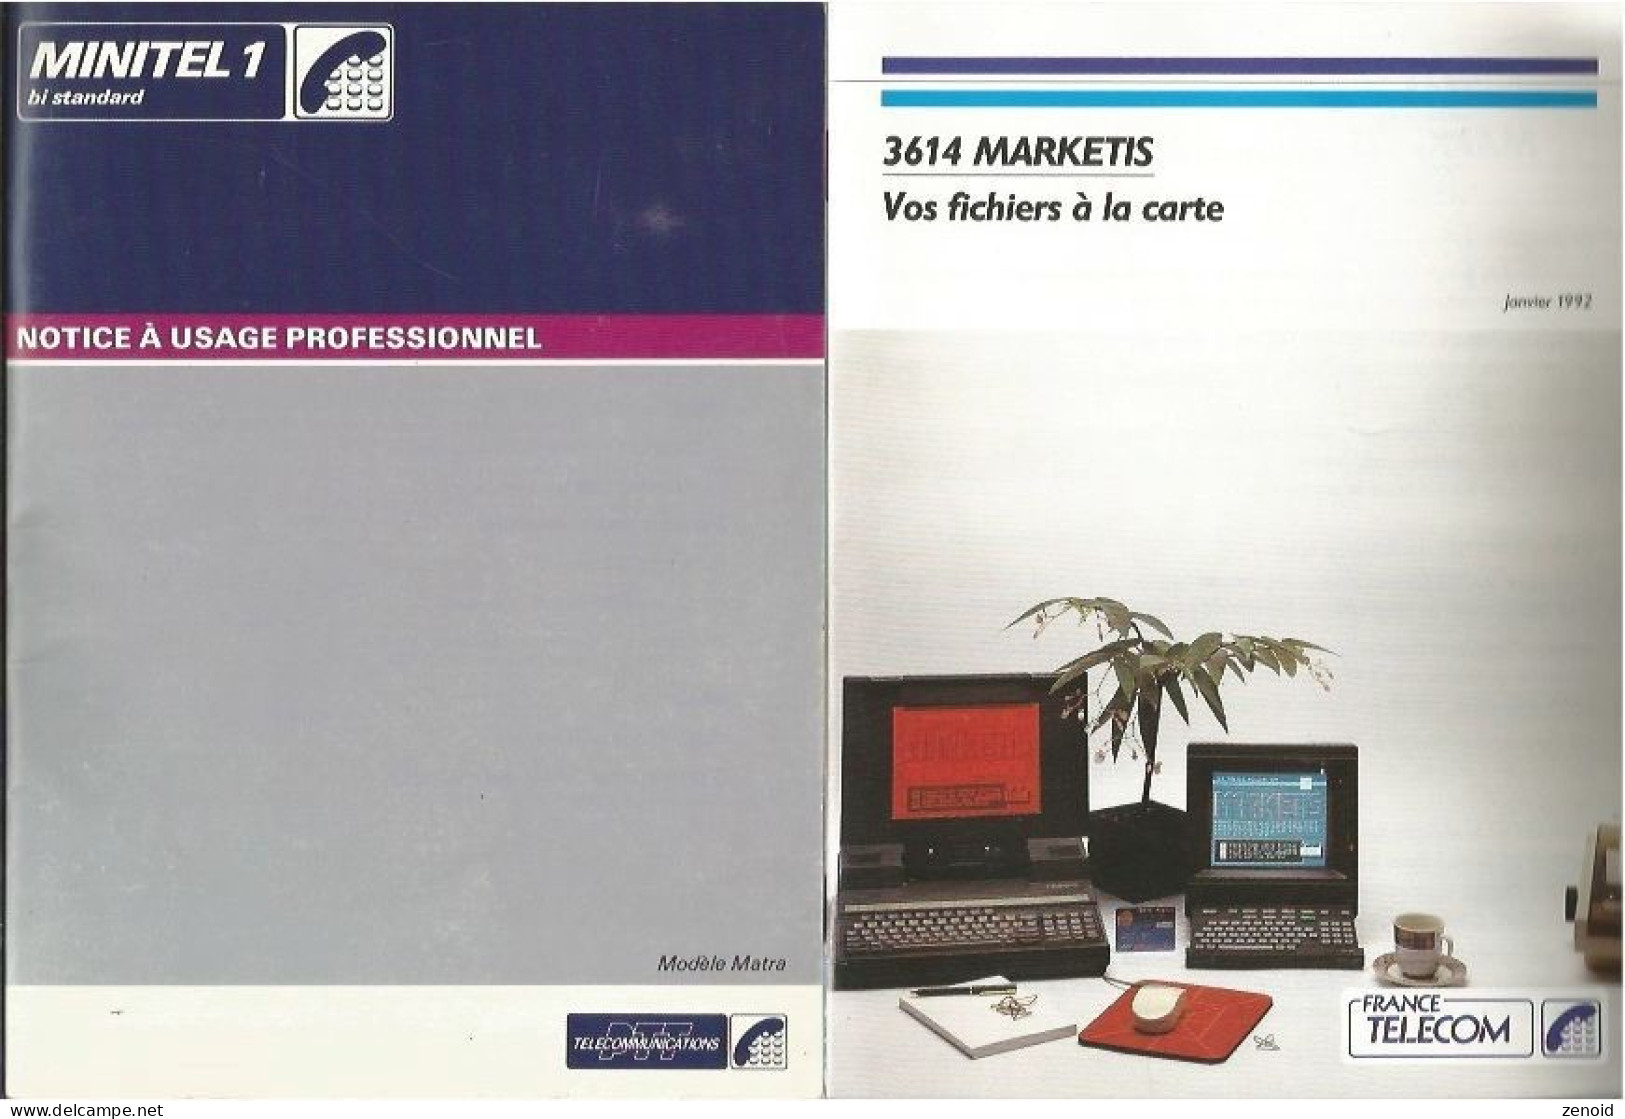 Envoi ,Les Pages Minitel 1995 + Livret "Minitel 1 - Telefonia